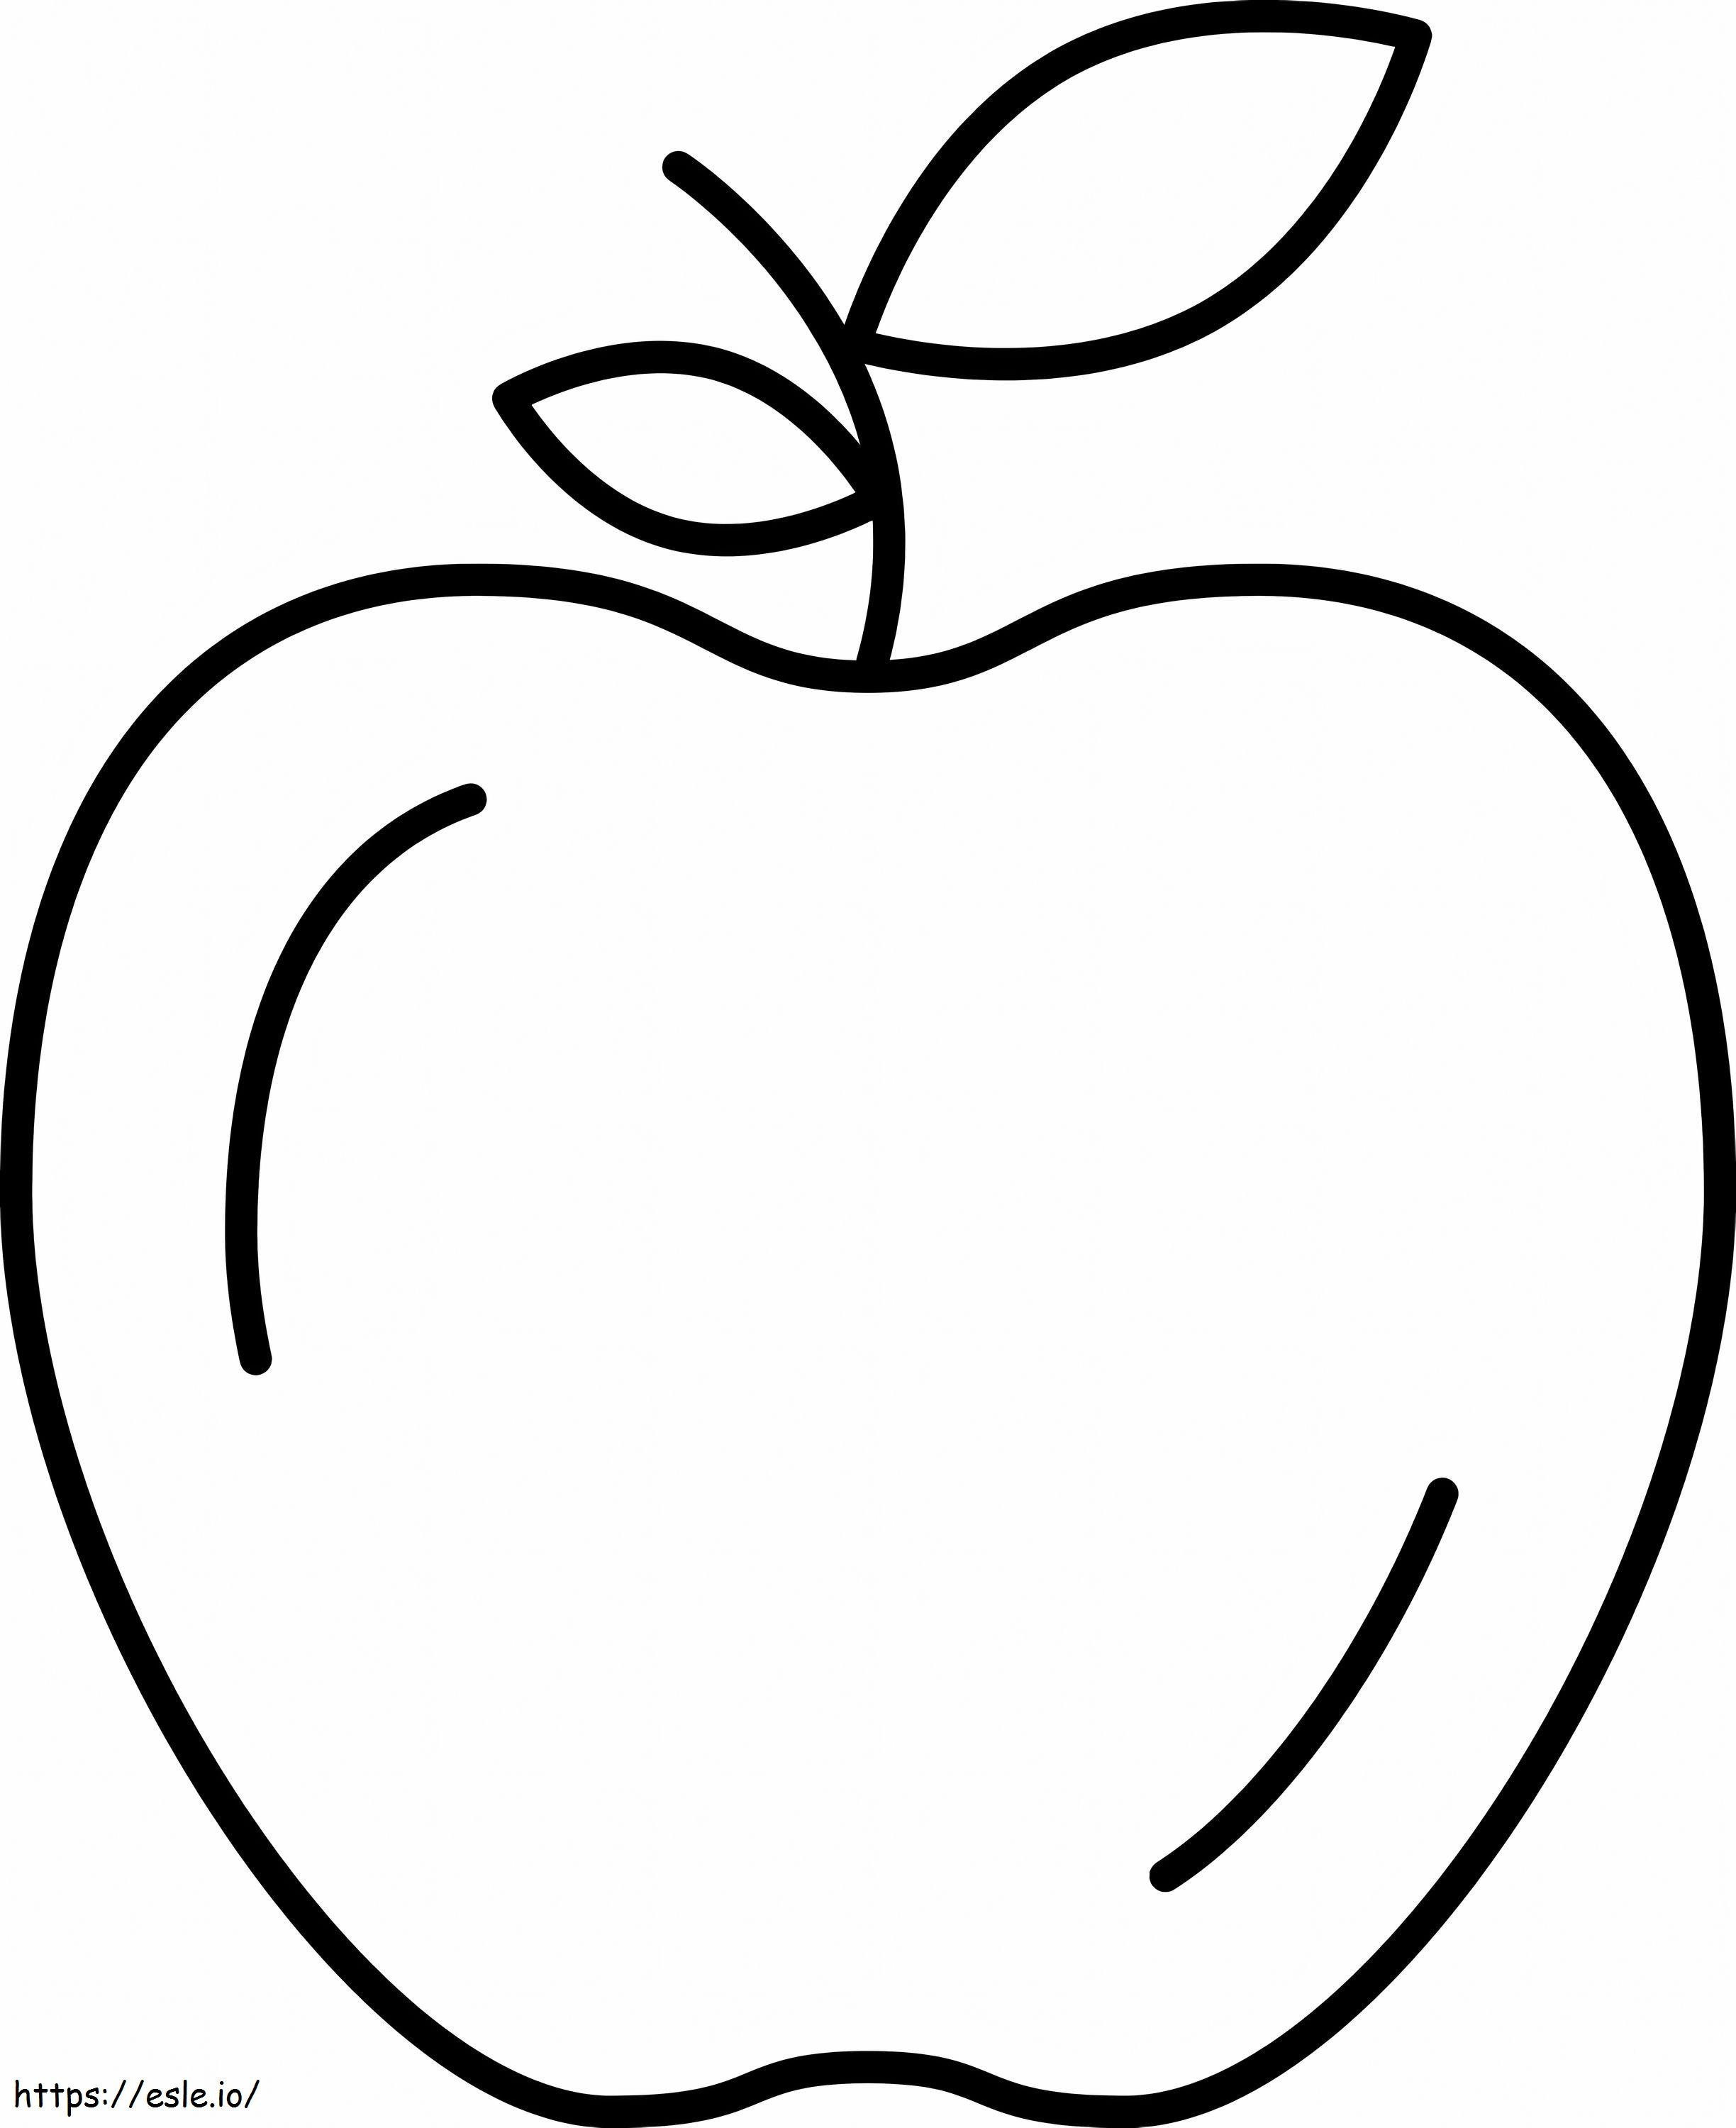 Guter Apfel ausmalbilder